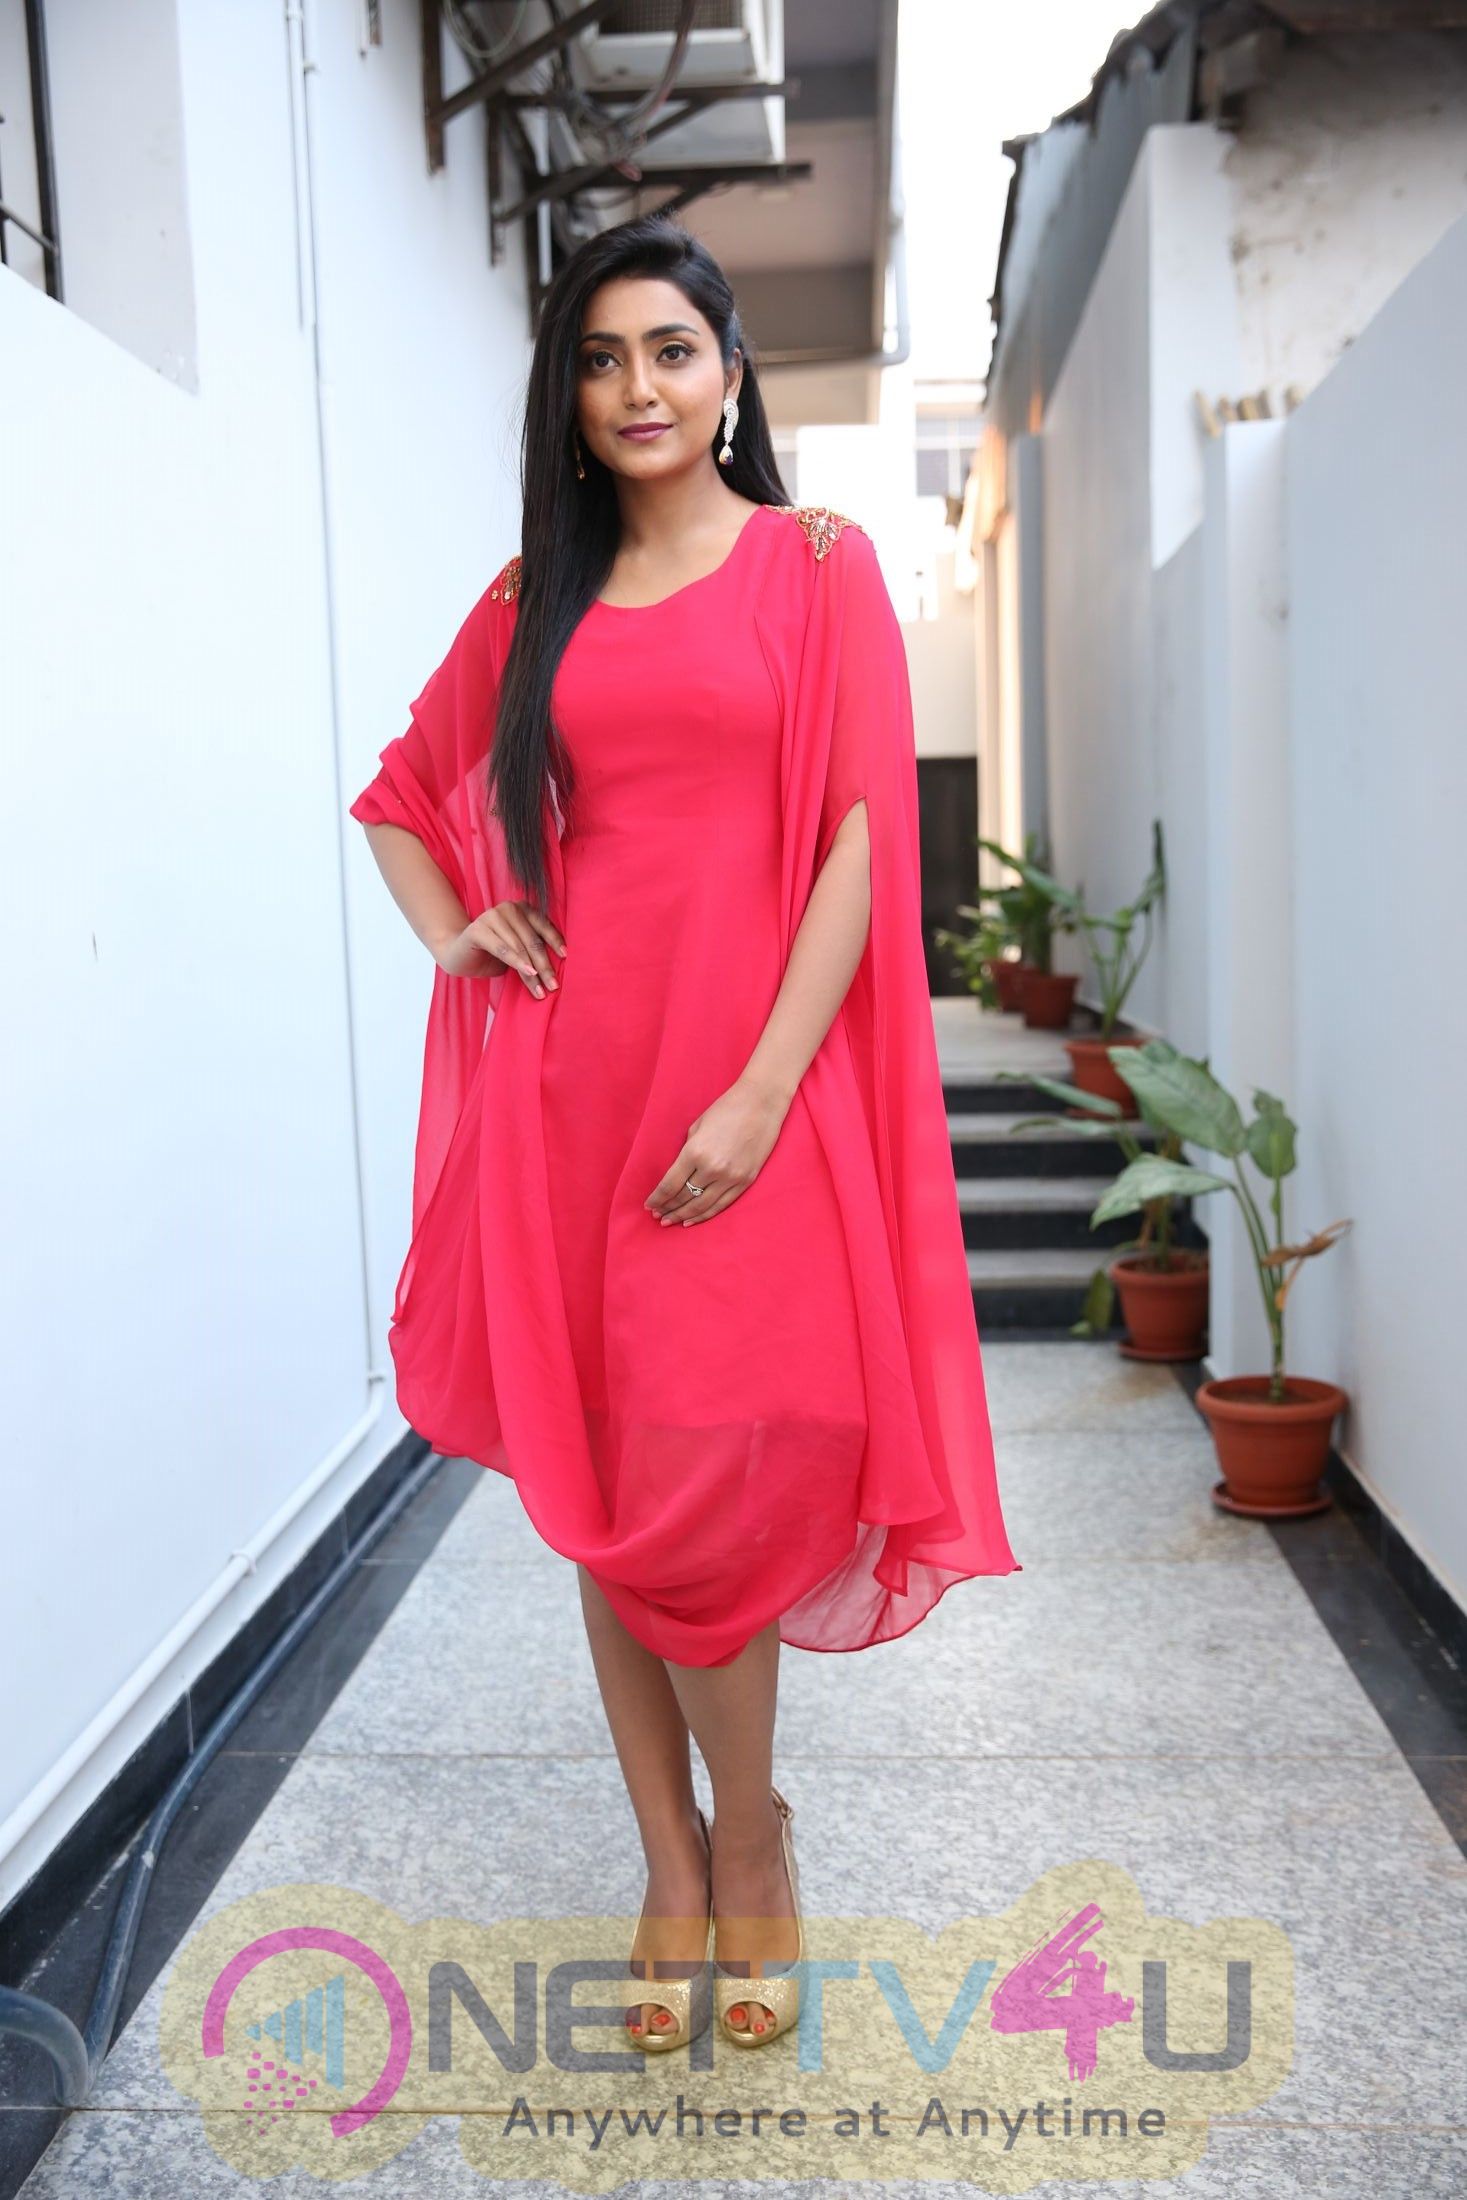 Actress Avantika Mishra Cute Photos Telugu Gallery